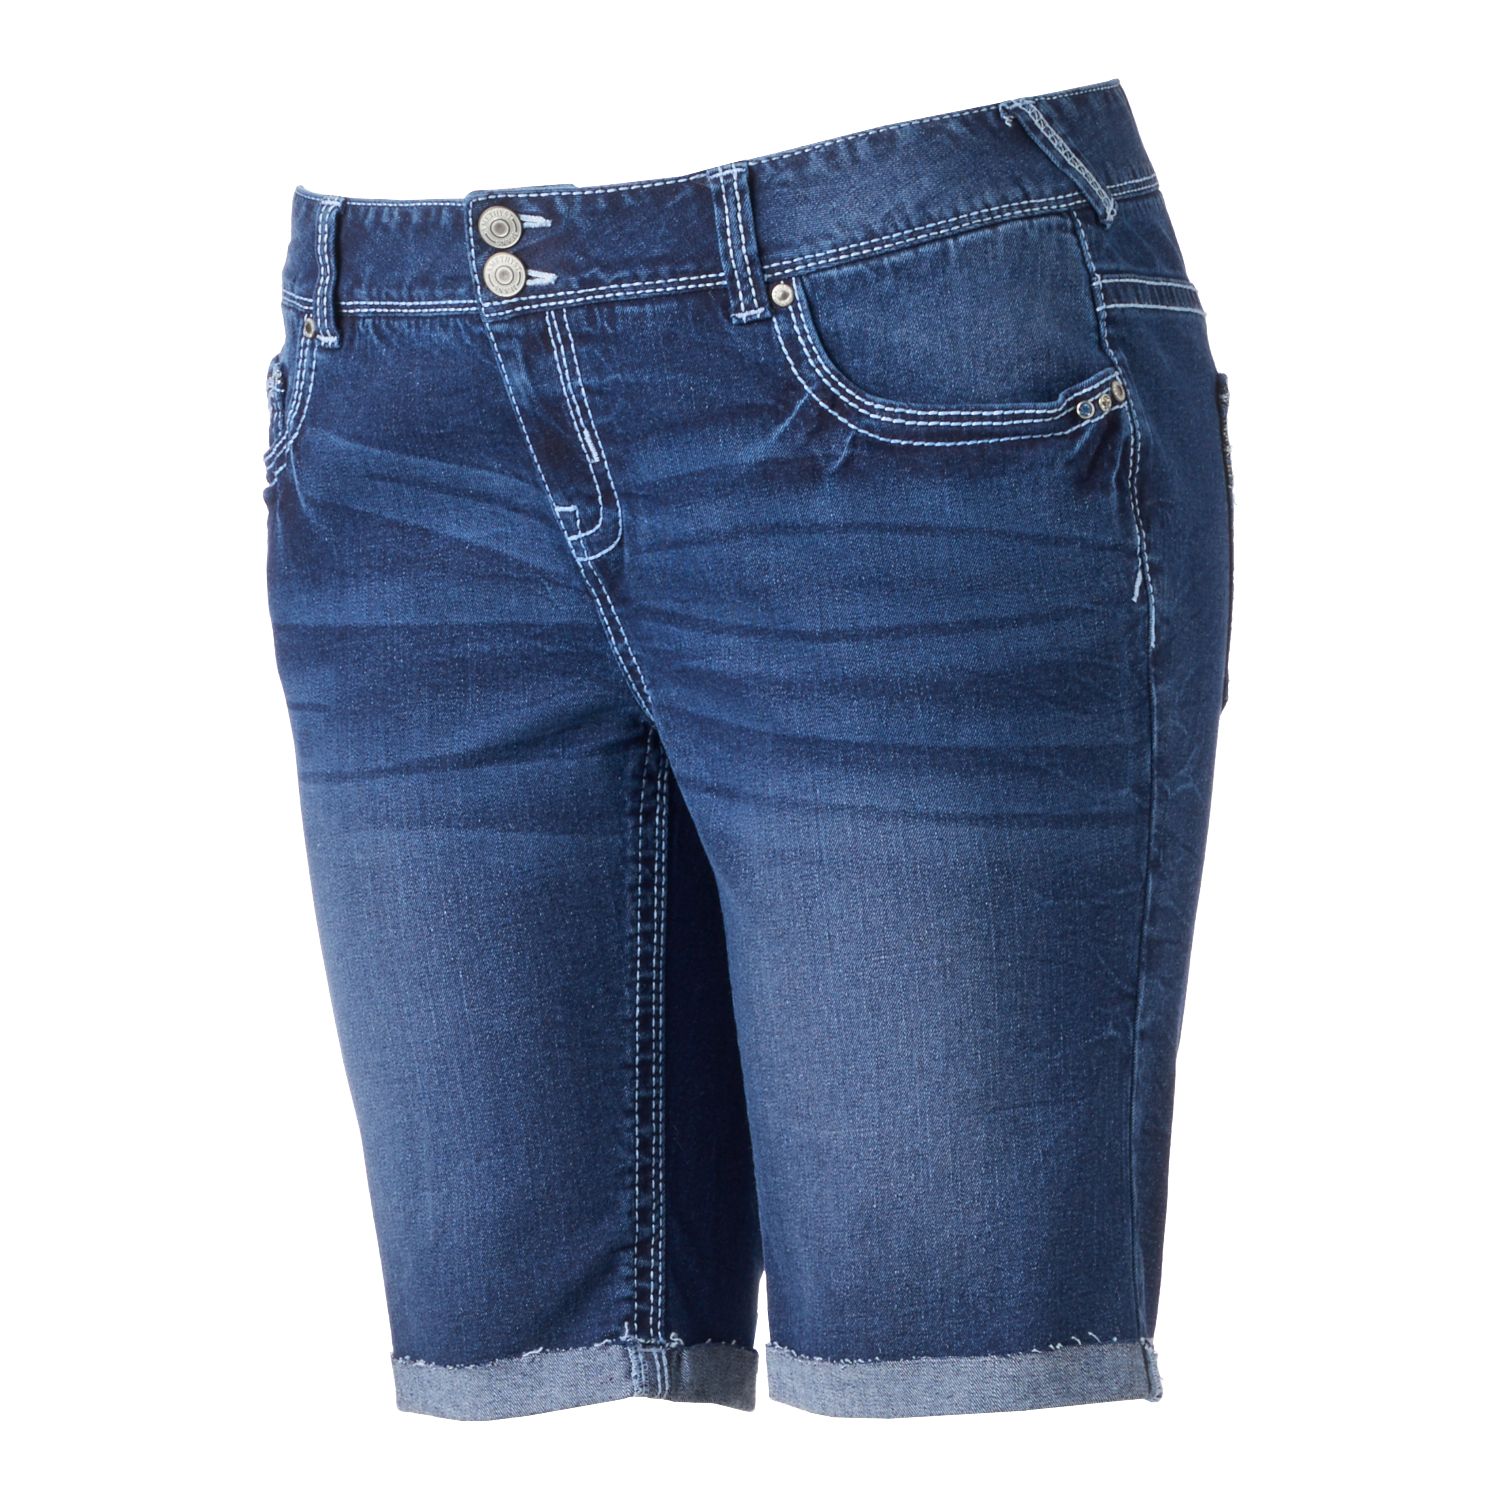 amethyst jeans shorts